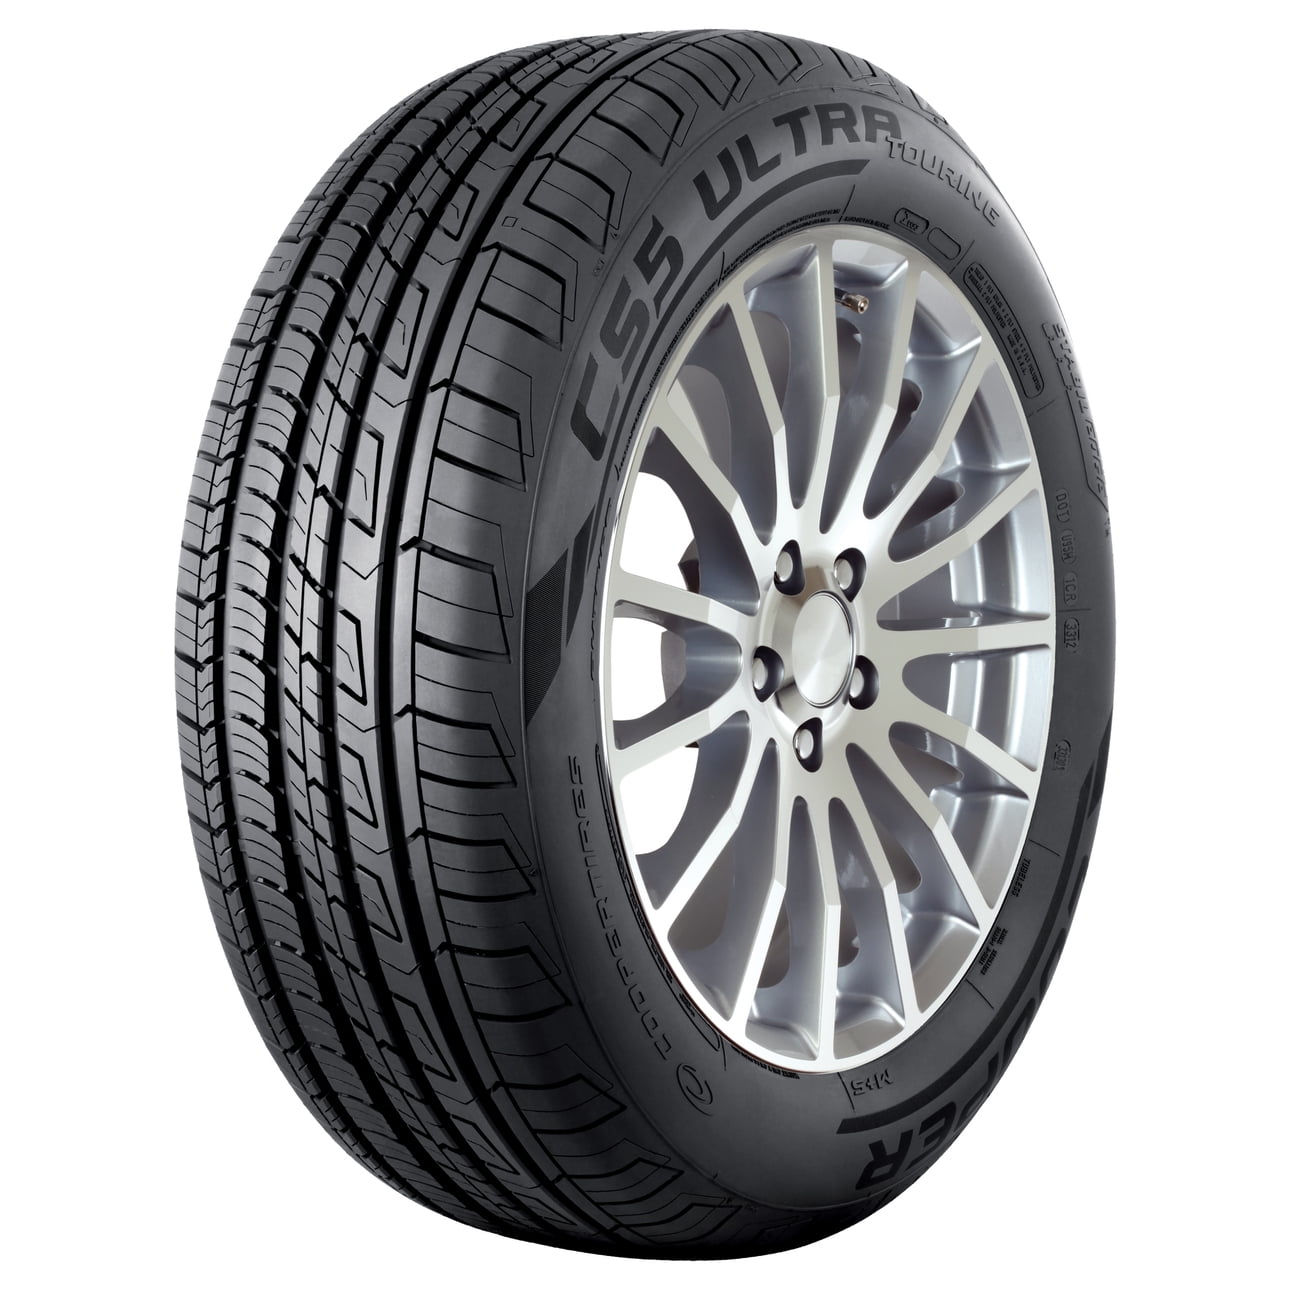 2 New Cooper CS5 Ultra Touring 205/65R16 95H A/S All Season Tires 